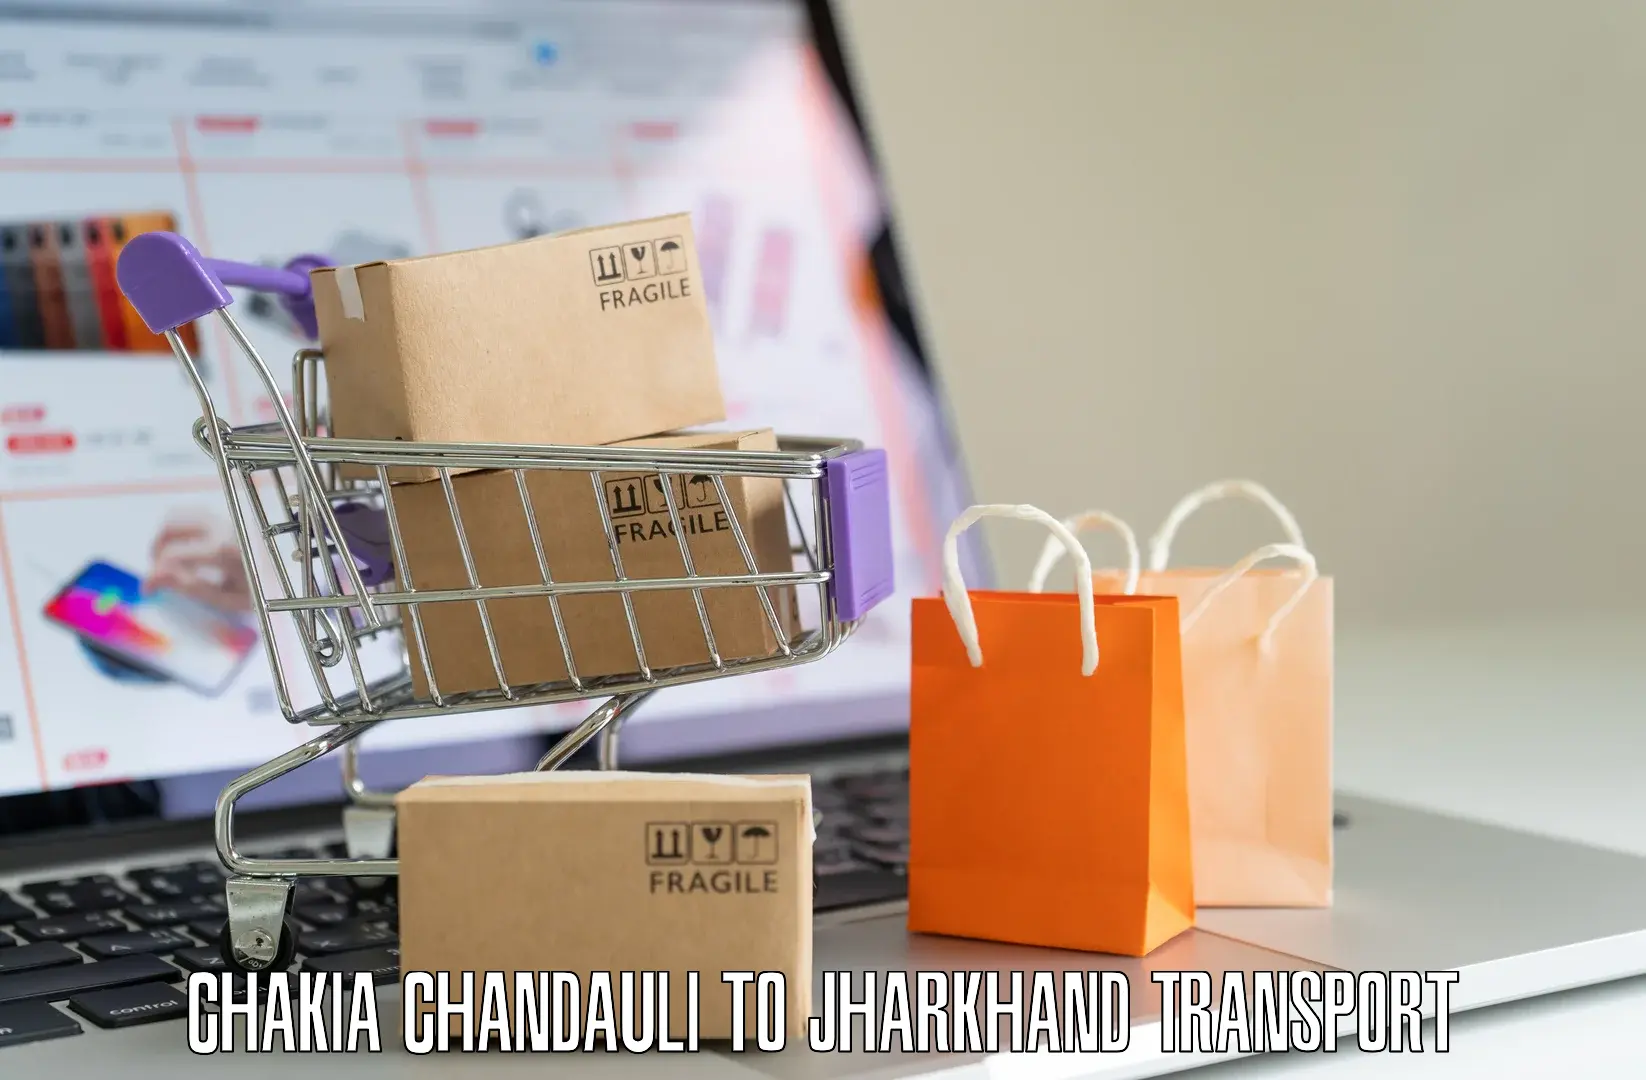 Bike shipping service Chakia Chandauli to Domchanch